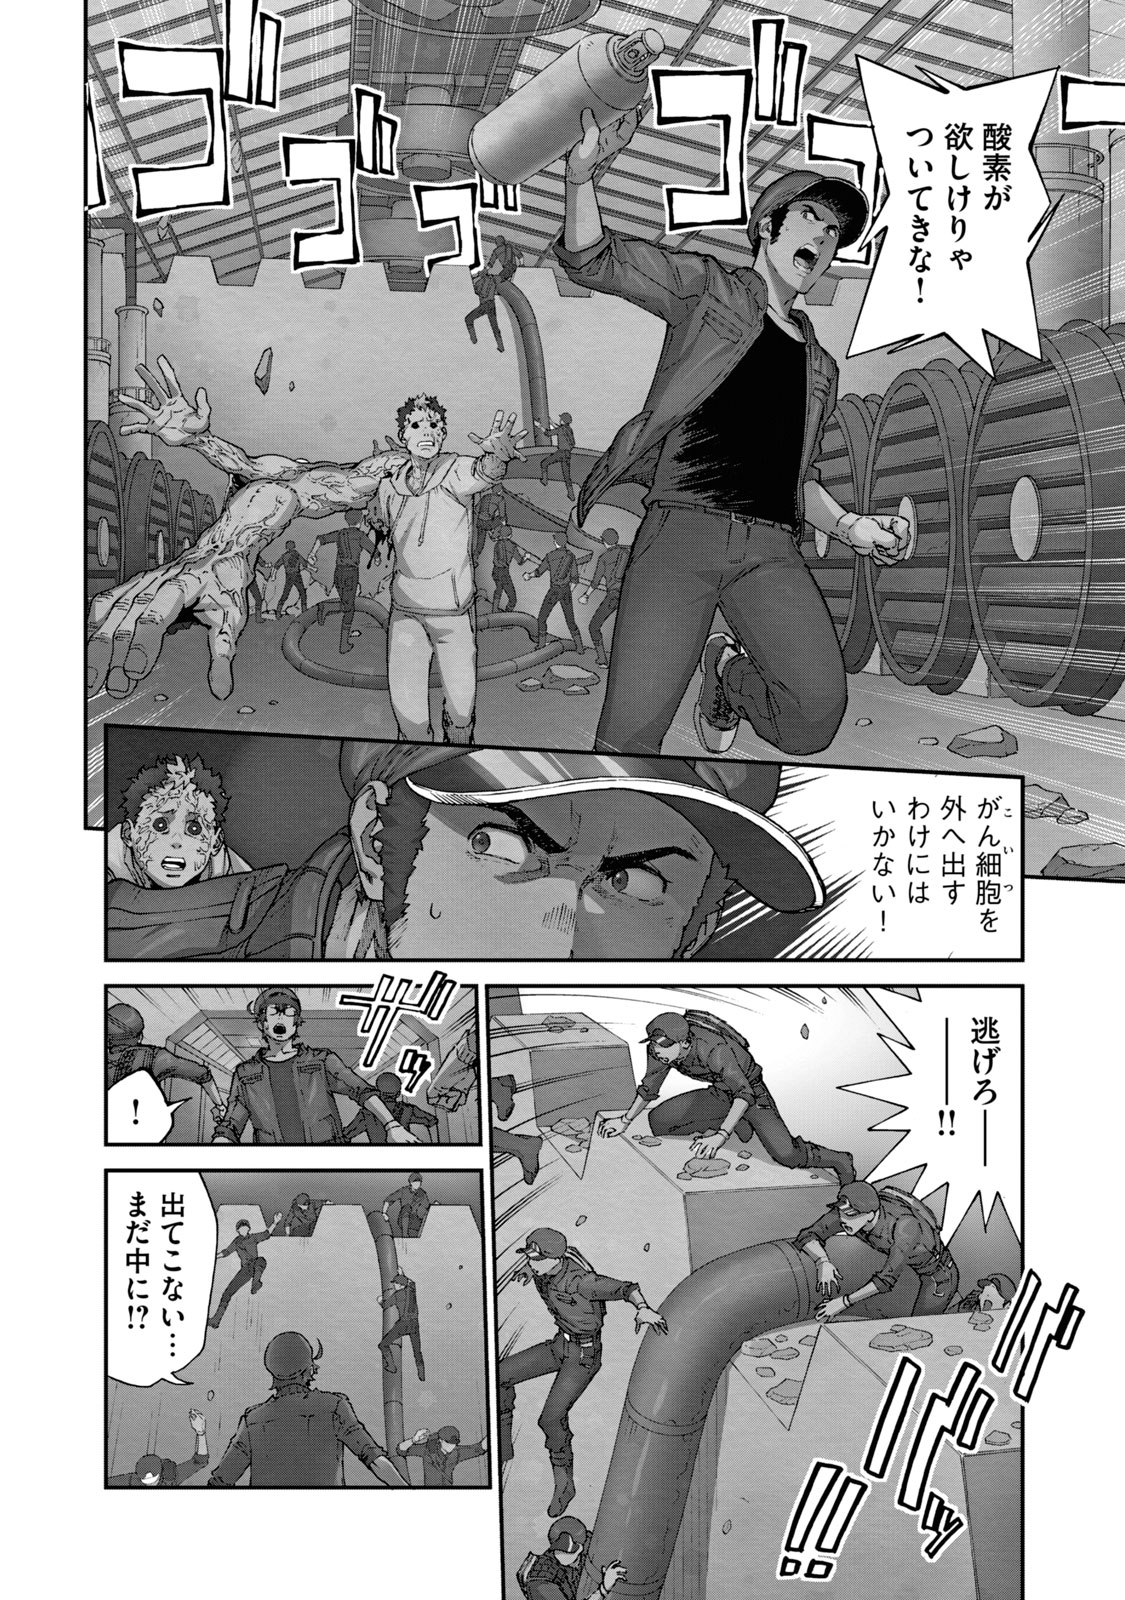 Hataraku Saibou BLACK - Chapter 39 - Page 2